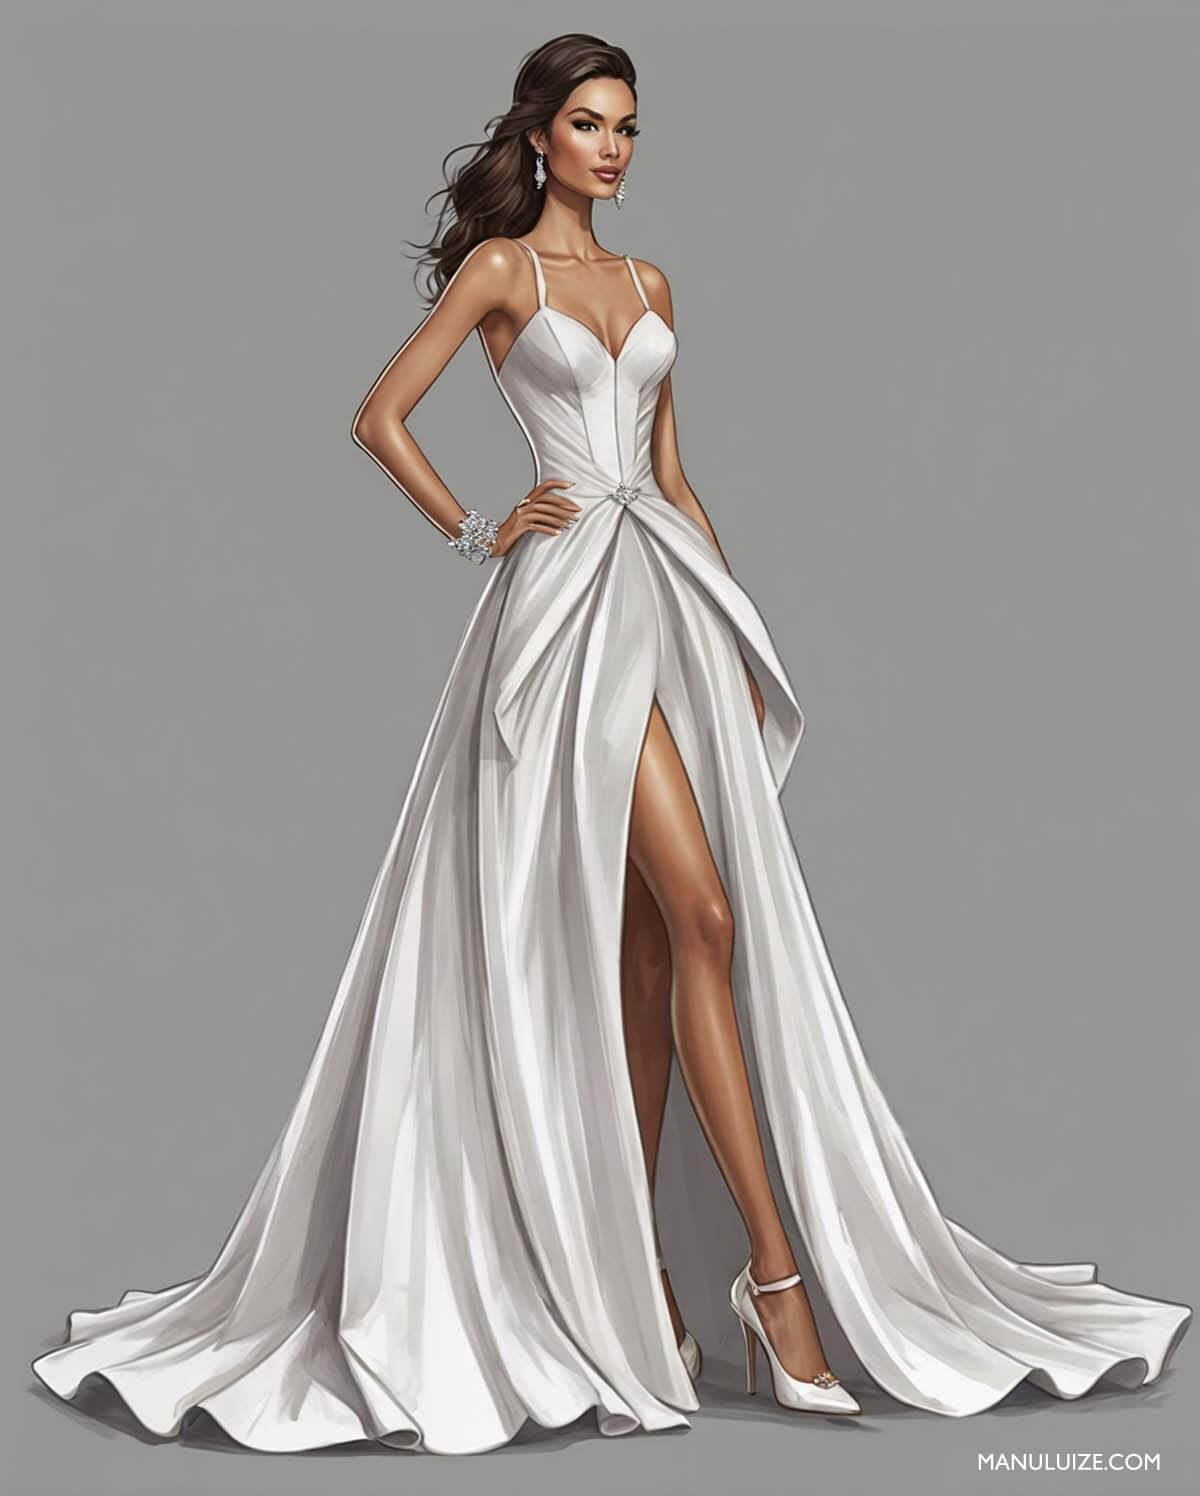 Croqui de vestido de noiva